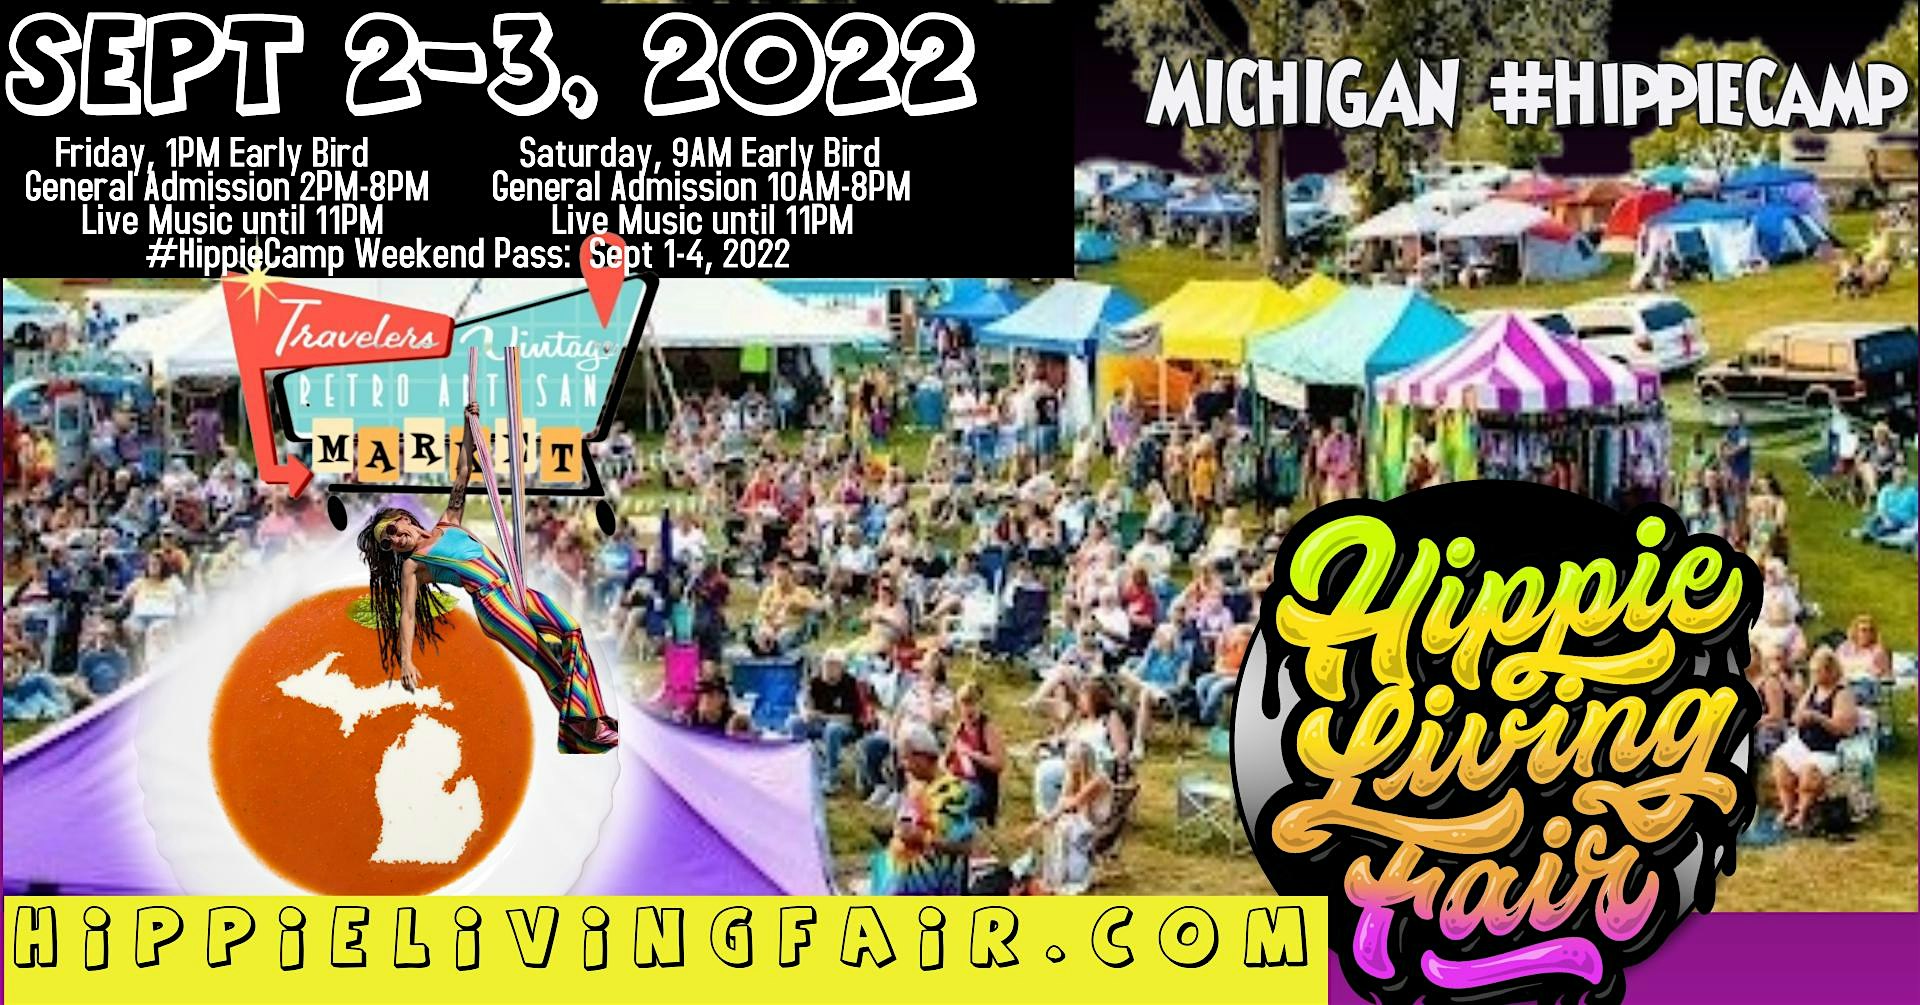 Hippie/Farmhouse Living Fair Sept 2-3 Travelers Vintage Market #HippieCamp, 2 September | Event in Berrien Springs